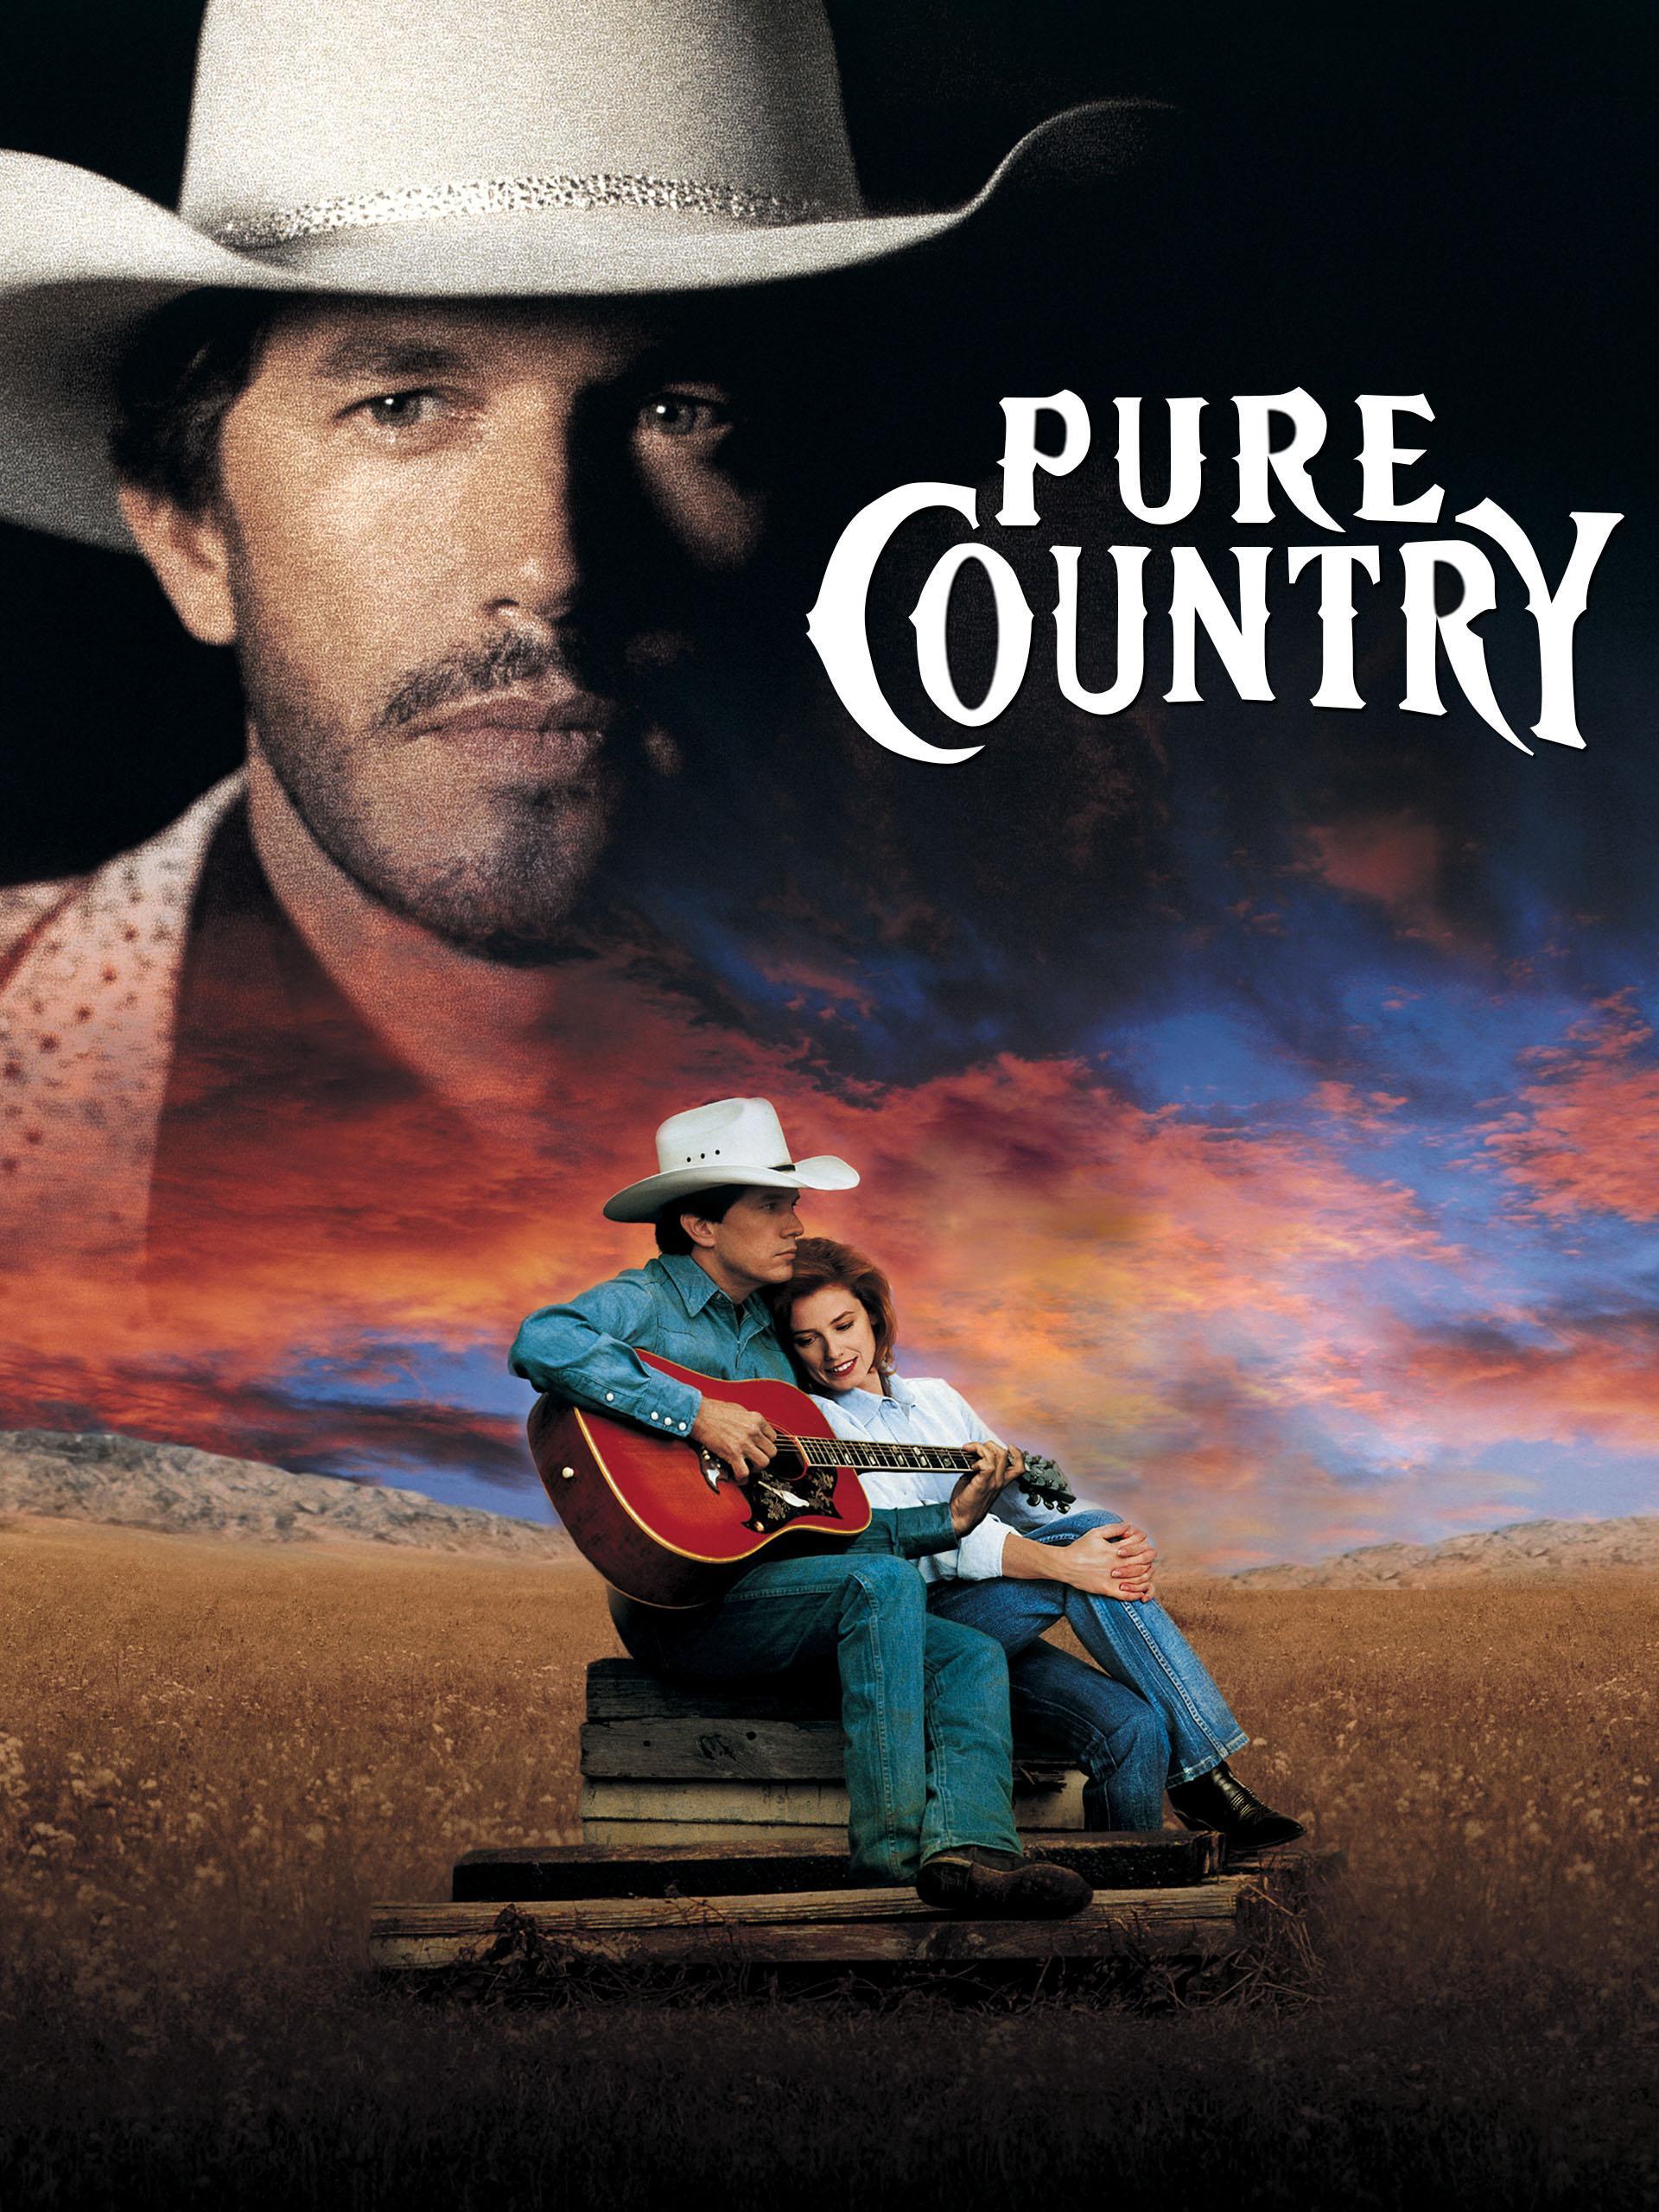 Pure Country - DVD [ 1992 ]  - Drama Movies On DVD - Movies On GRUV